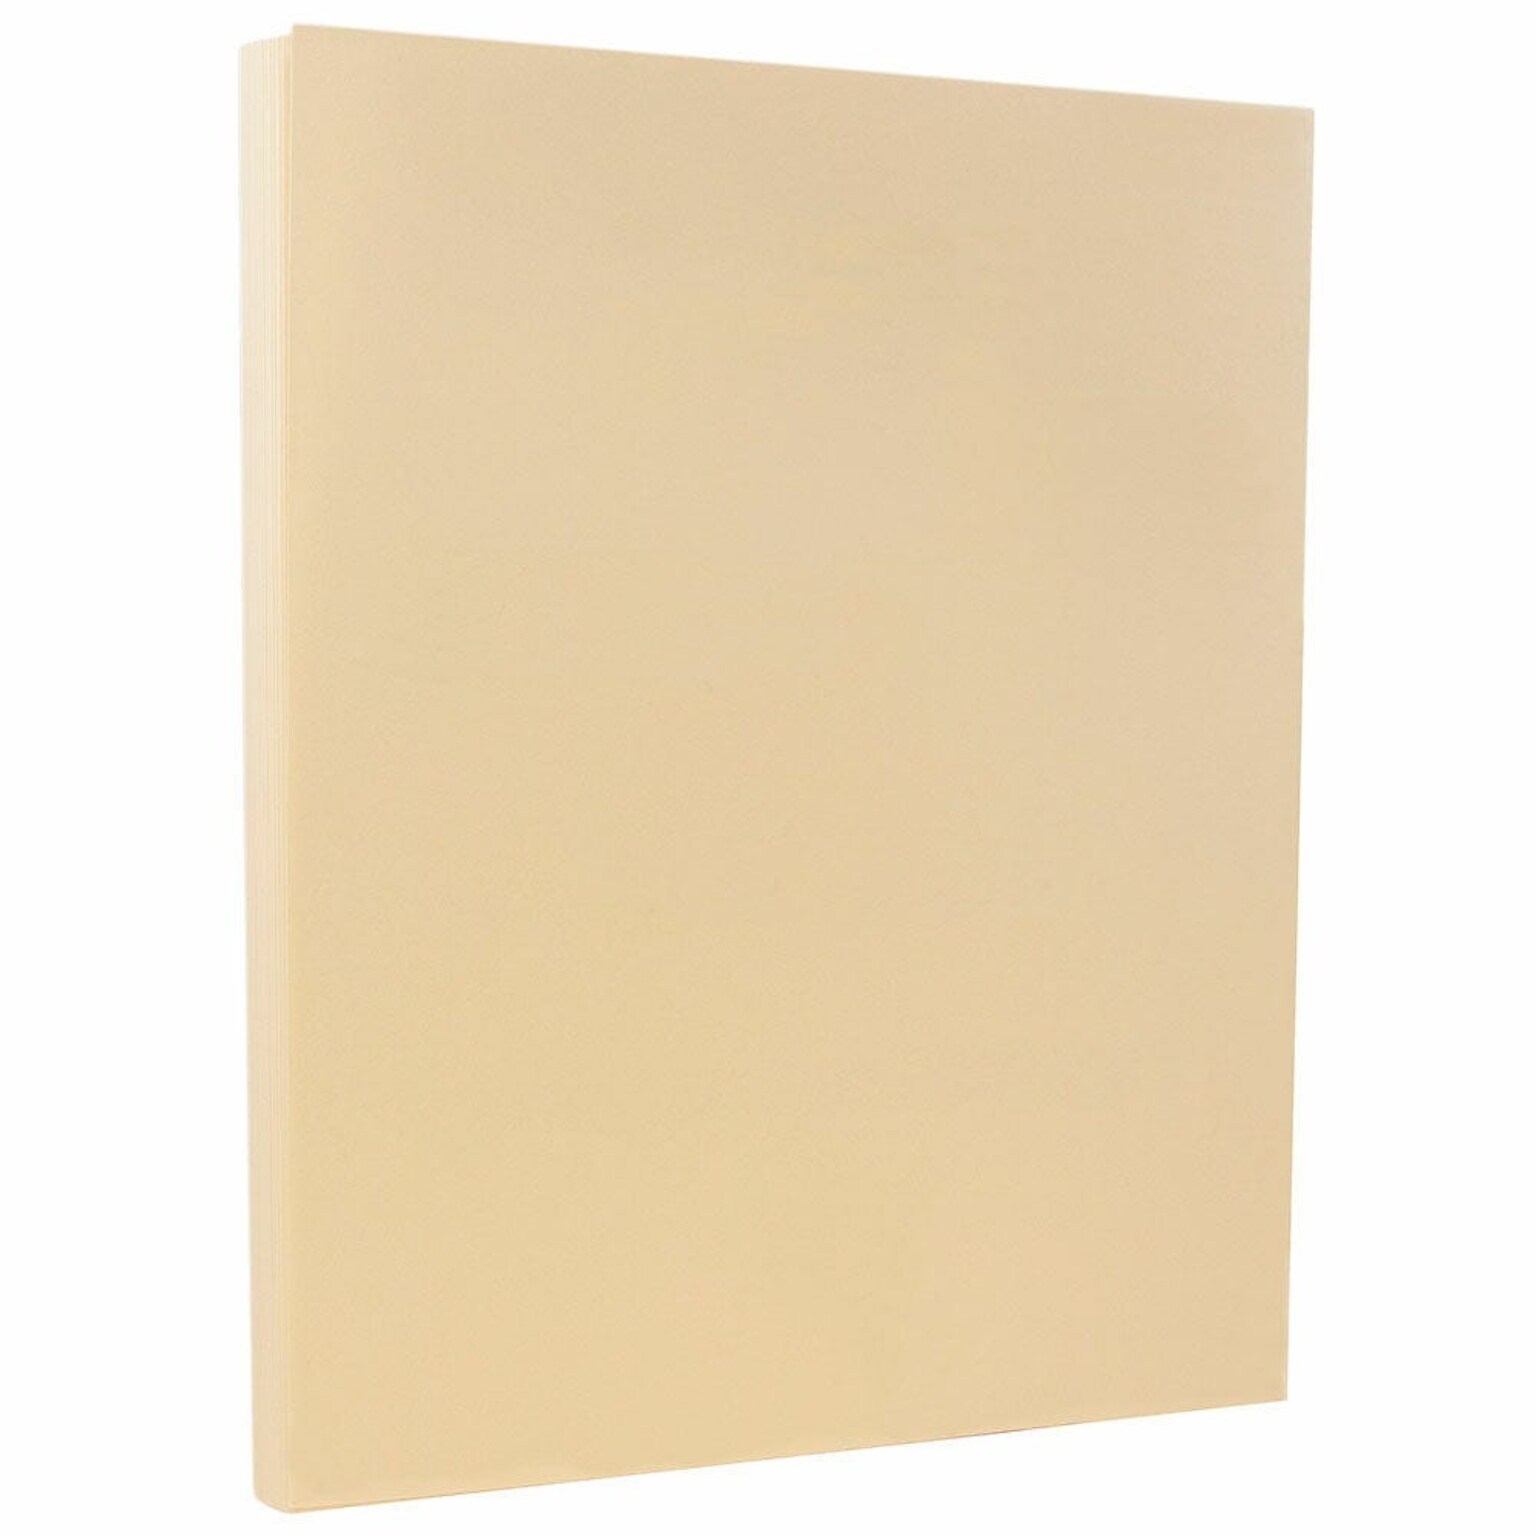 JAM PAPER 8.5 x 11 Vellum Bristol Cardstock, 67lb, Ivory, 100 Sheets/Pack (169828G)